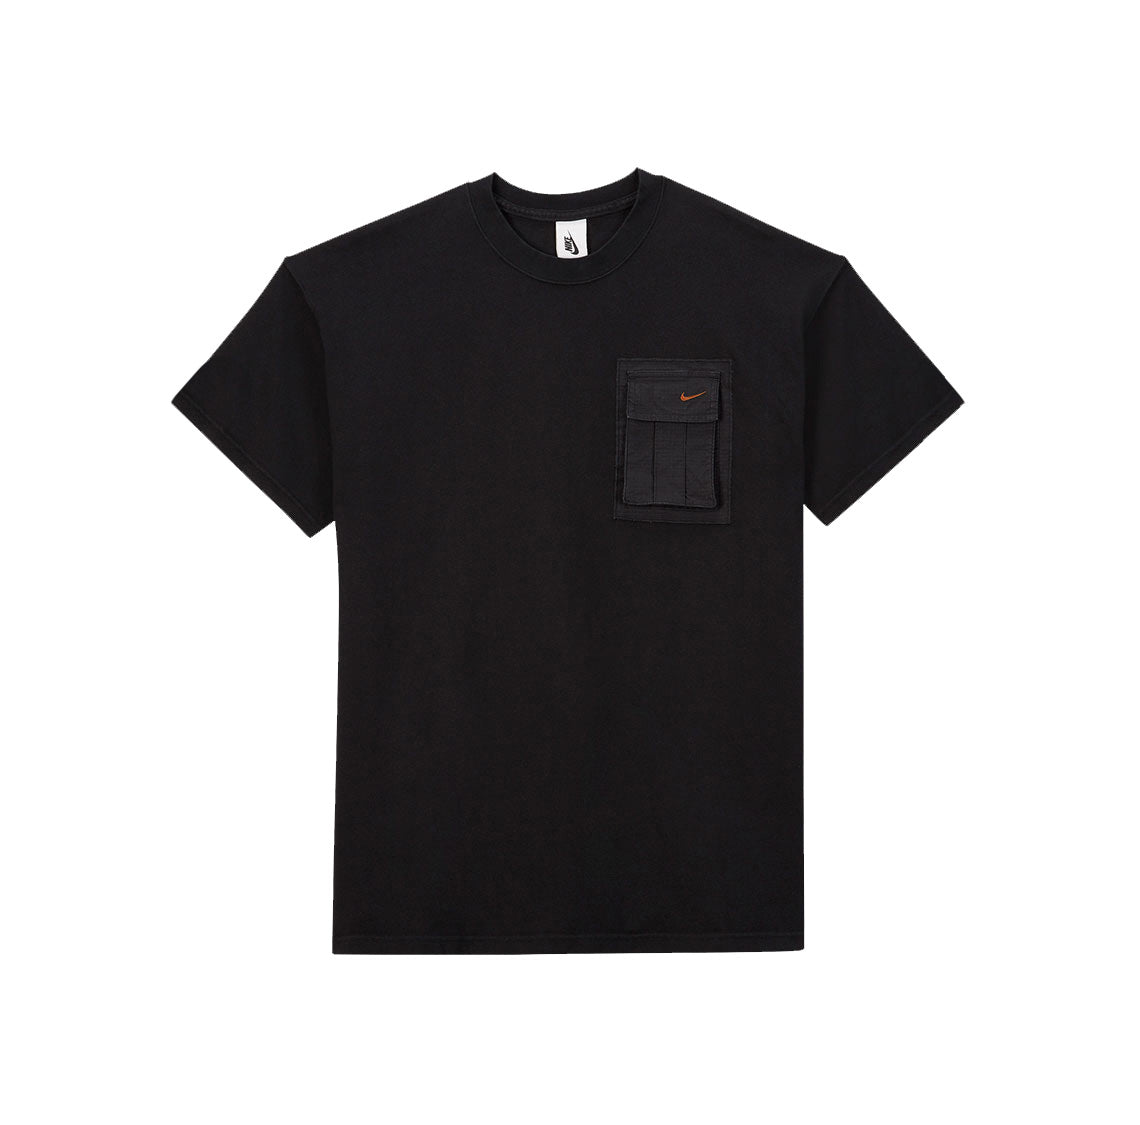 Travis Scott x Nike NRG AG Utility T Shirt - Black | Australia New Zealand